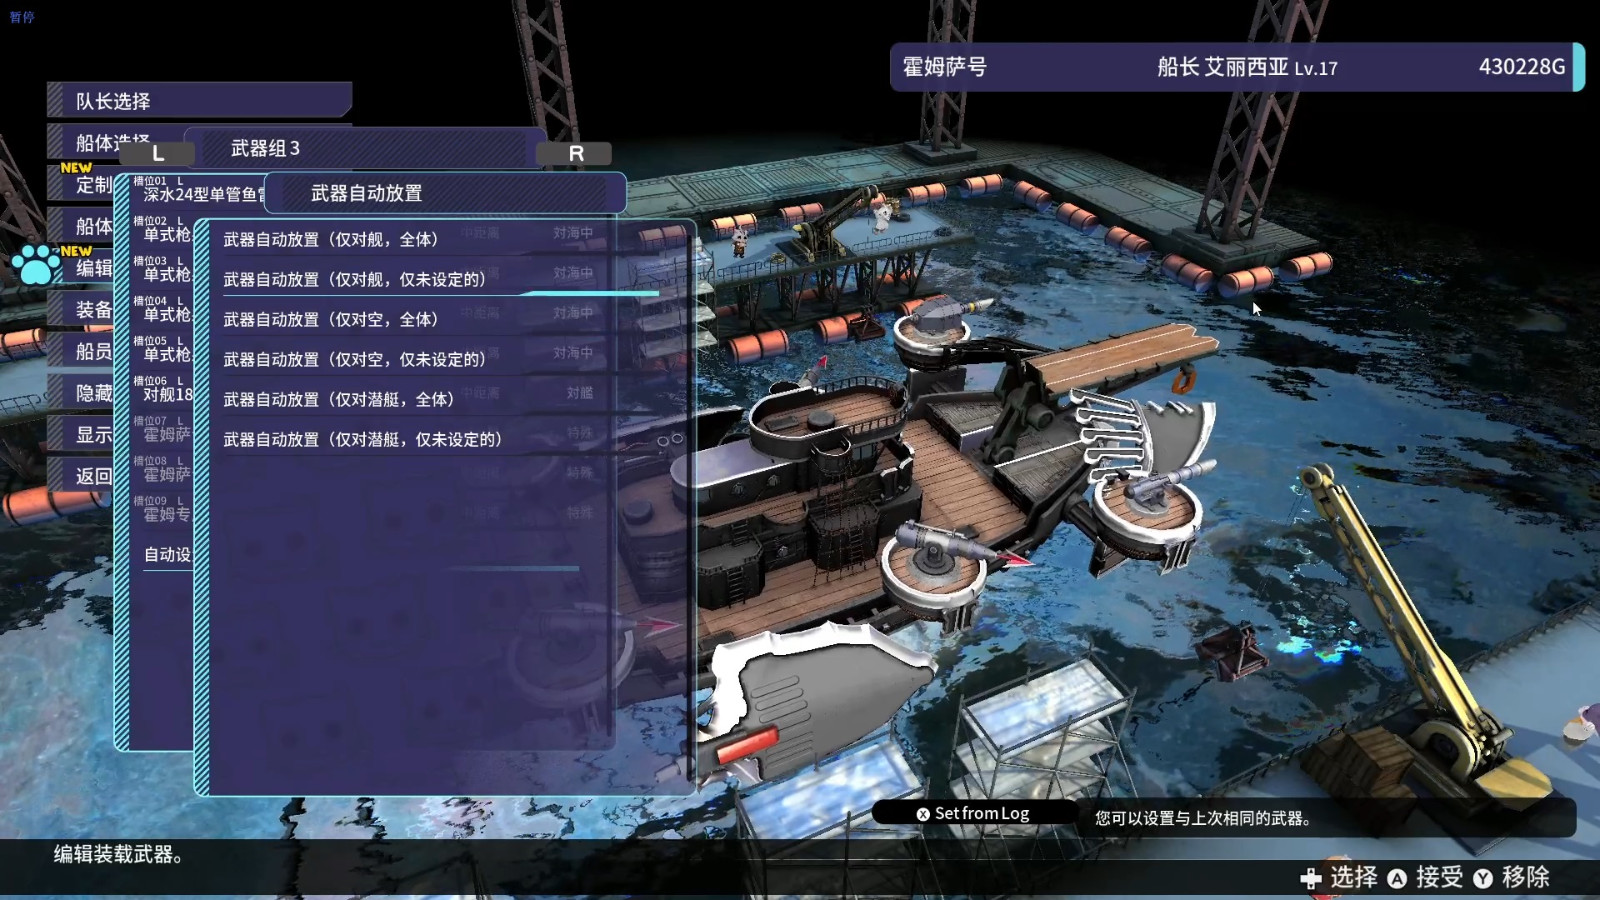 Gamera將發行美少女航海RPG《海天貓貓船 BUCCANYAR》 中文更新後價格將永降